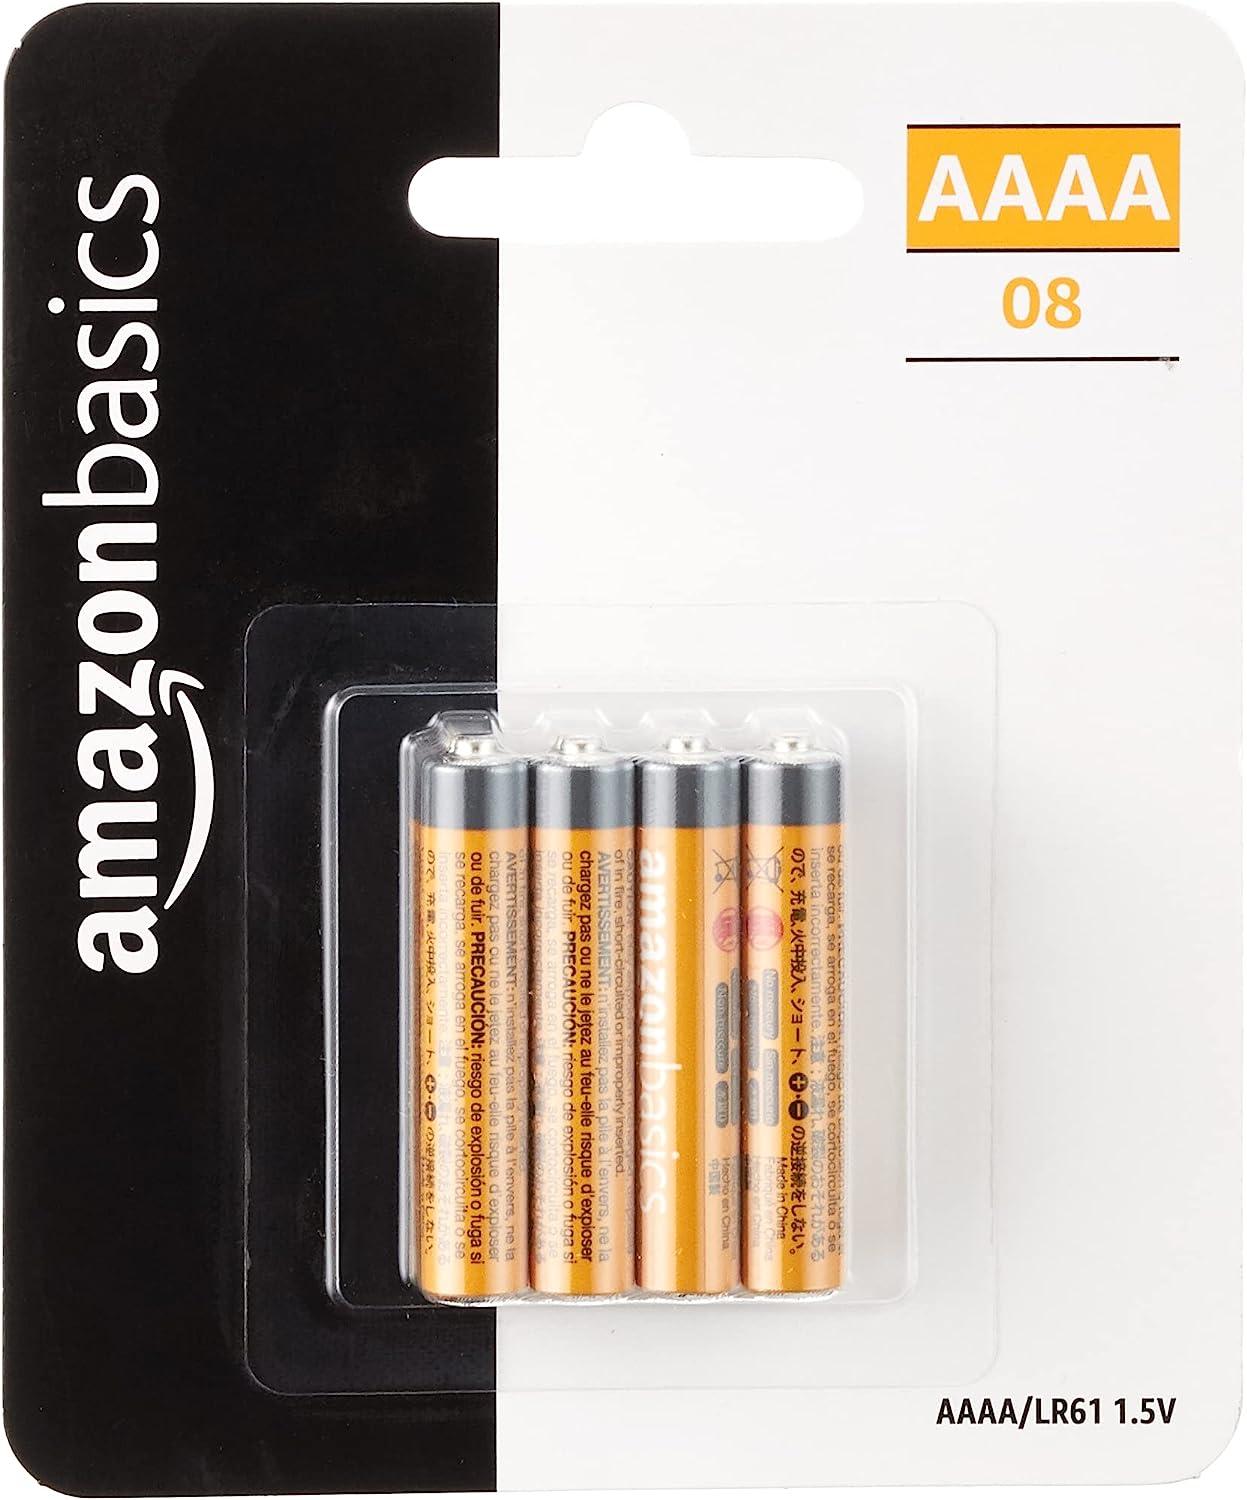 Basics 8 Pack AAAA High-Performance Alkaline Batteries, 3